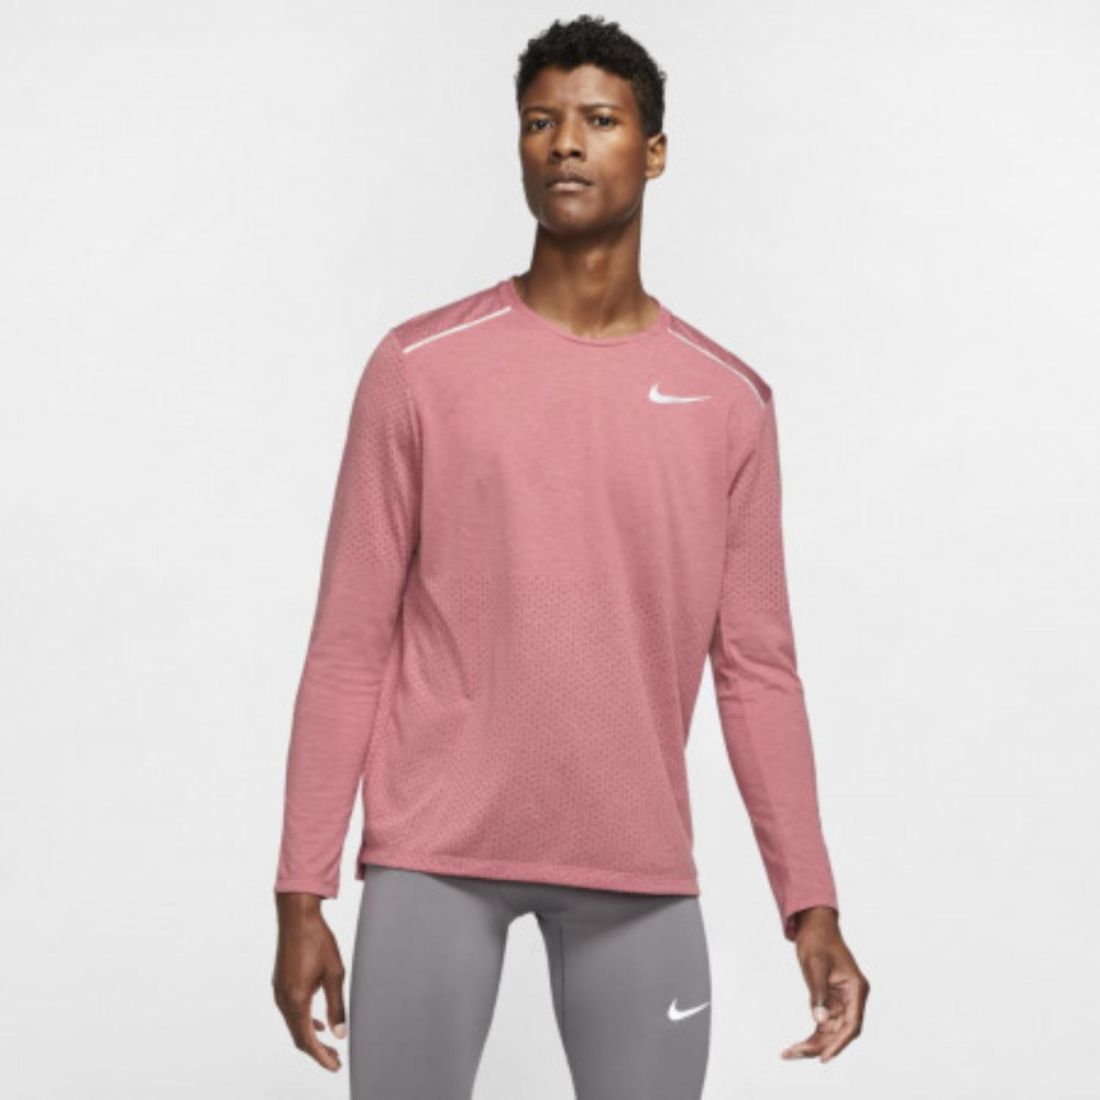 Спортивный мужской лонгслив Nike Rise 365